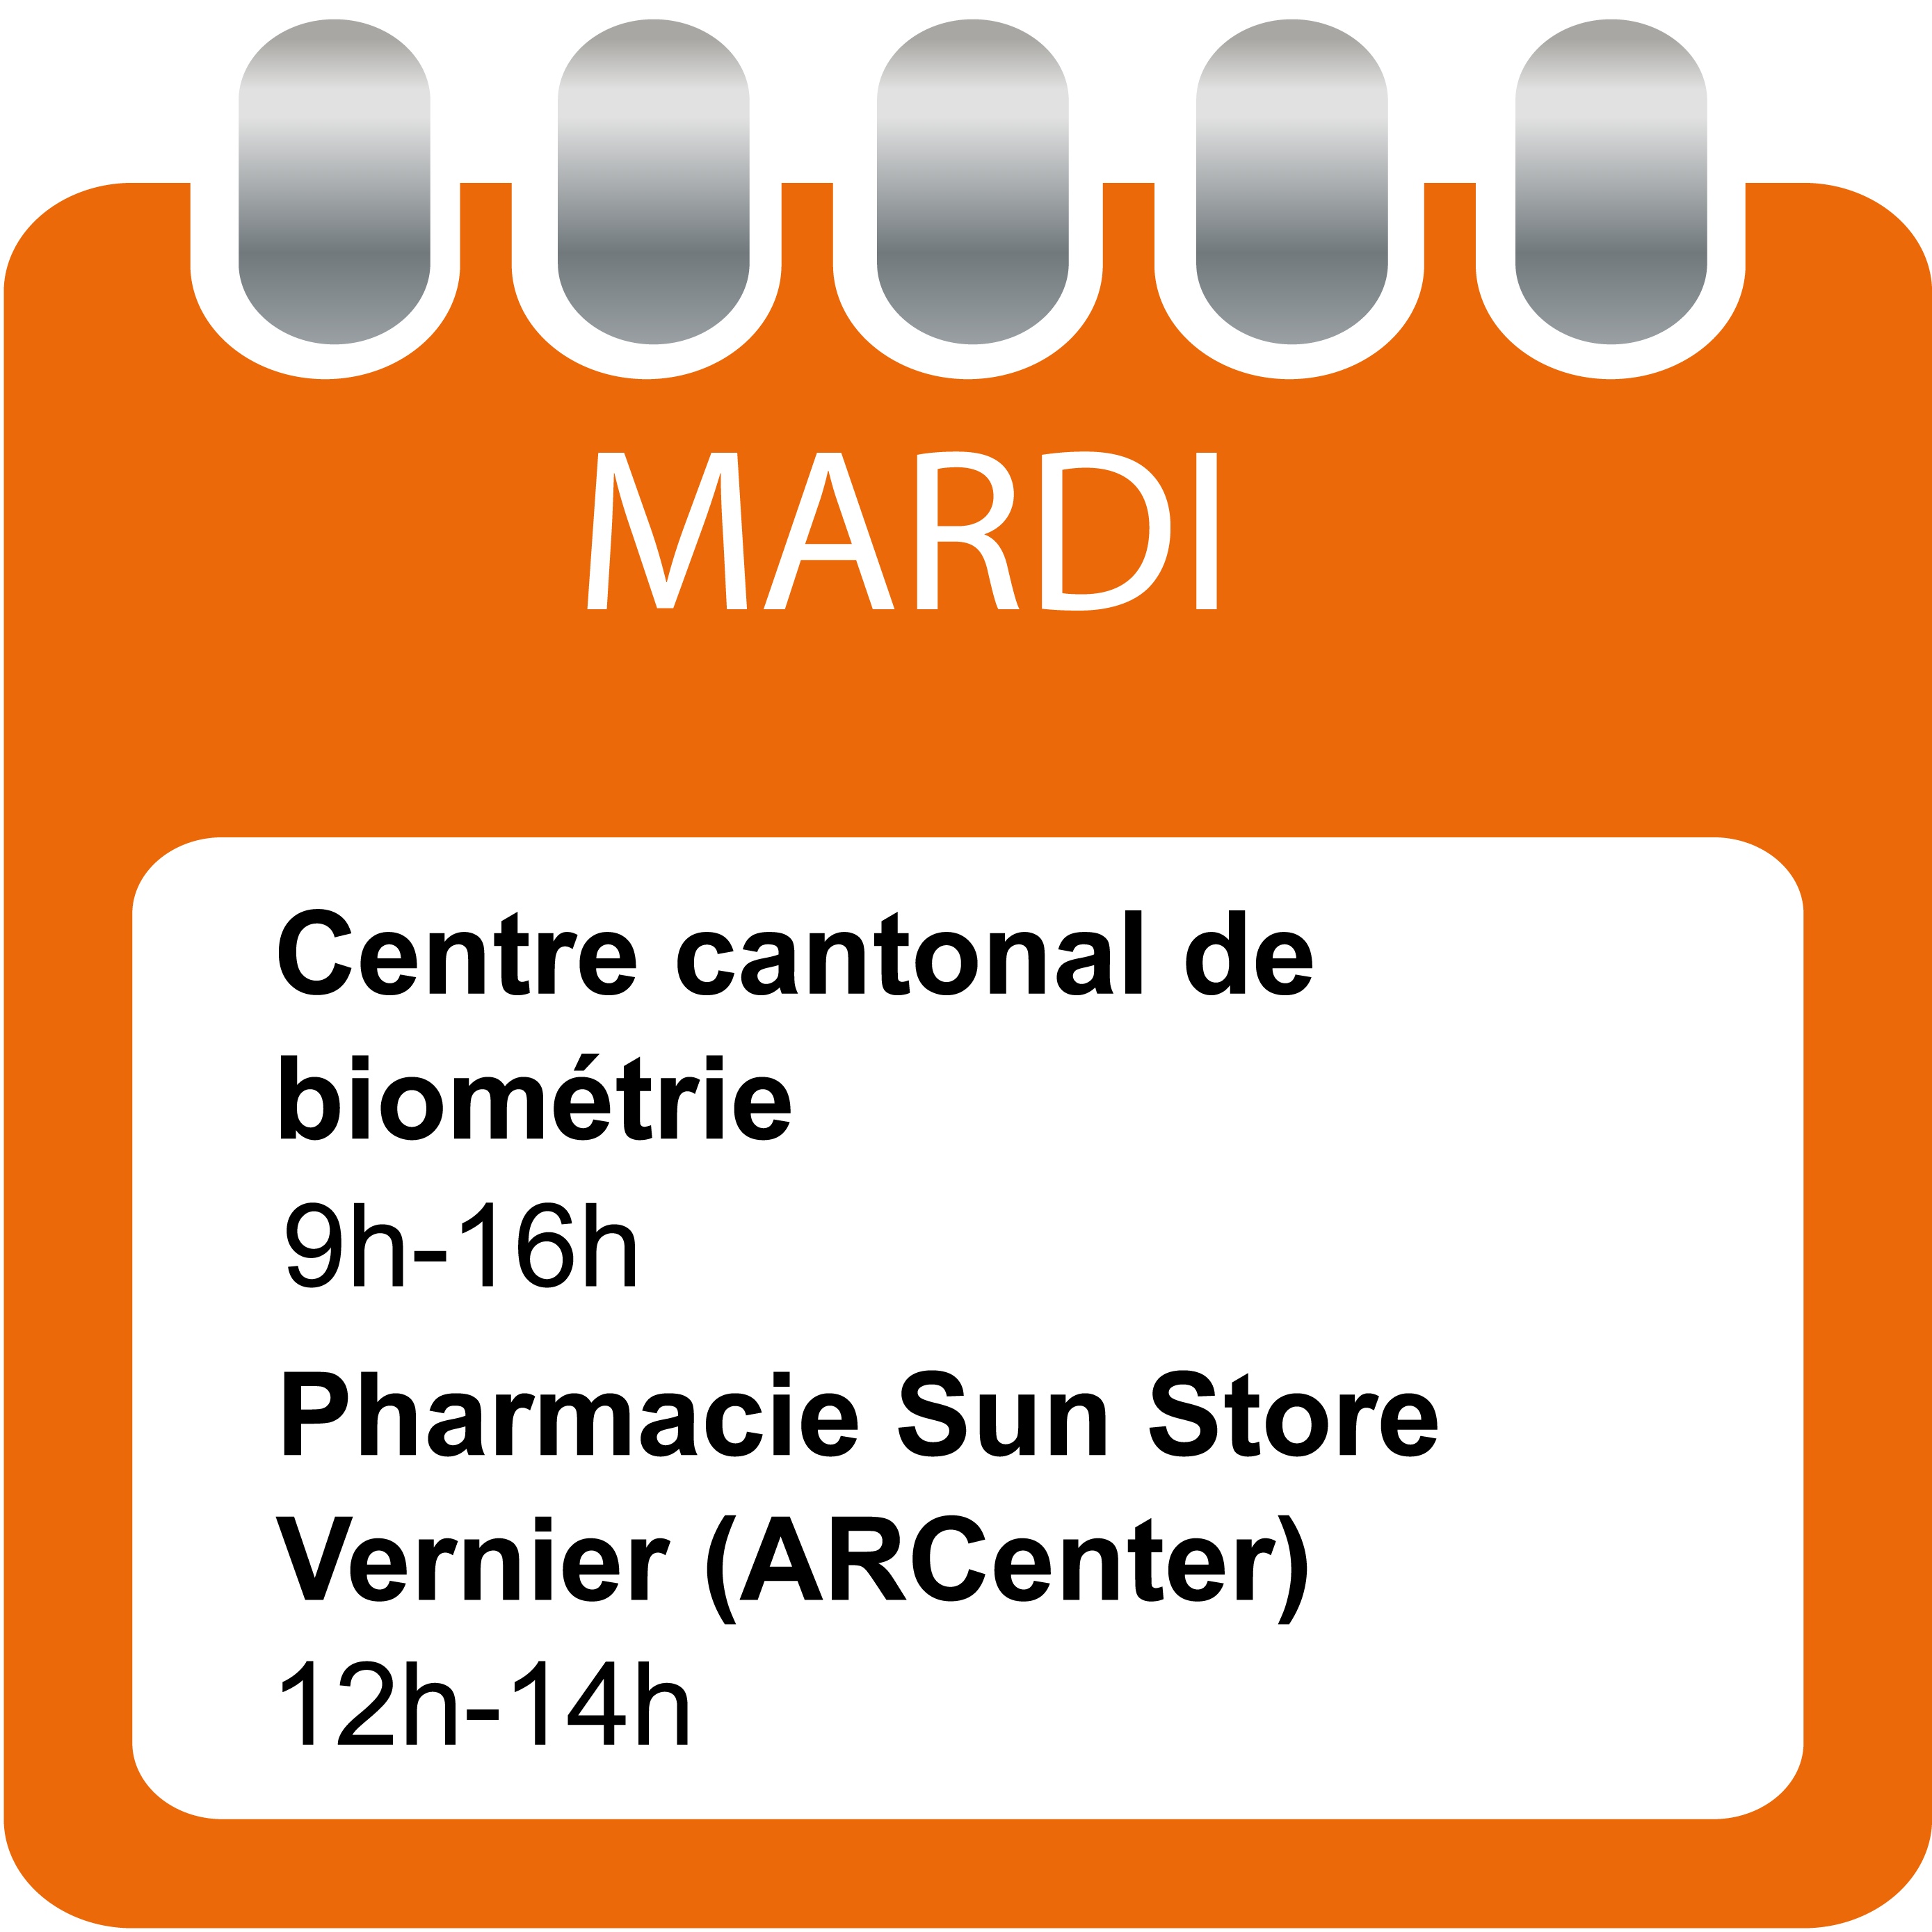 Mardi - Centre cantonal de biométrie (9h-16h) et Pharmacie Sun Store Vernier - ARCenter (12h-14h)